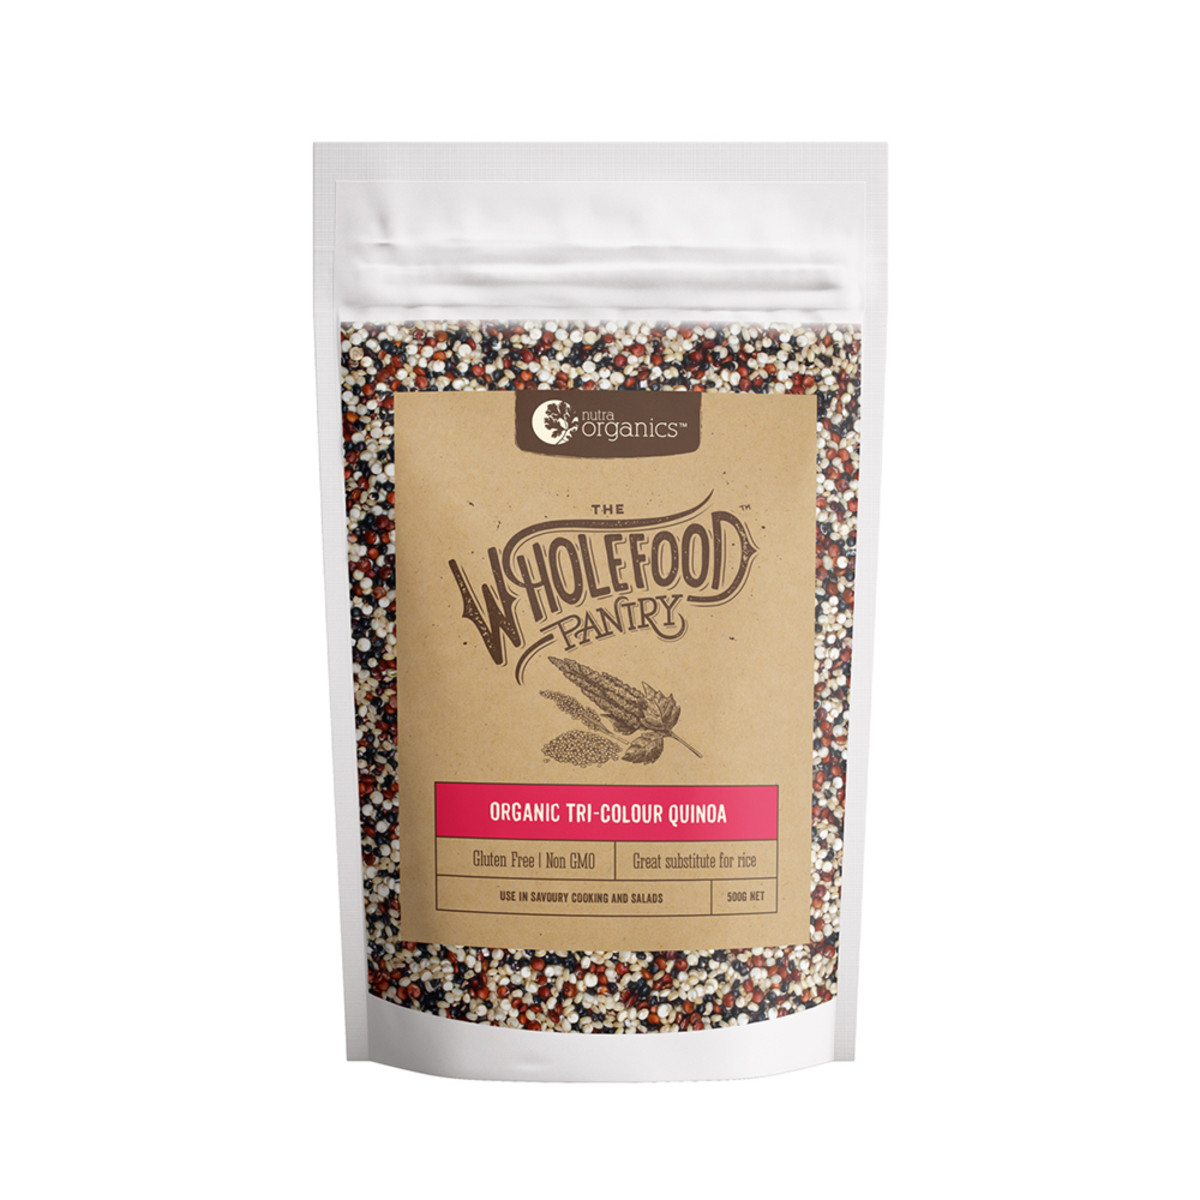 NUTRA ORGANICS - THE WHOLEFOOD PANTRY Organic Tri-Colour Quinoa